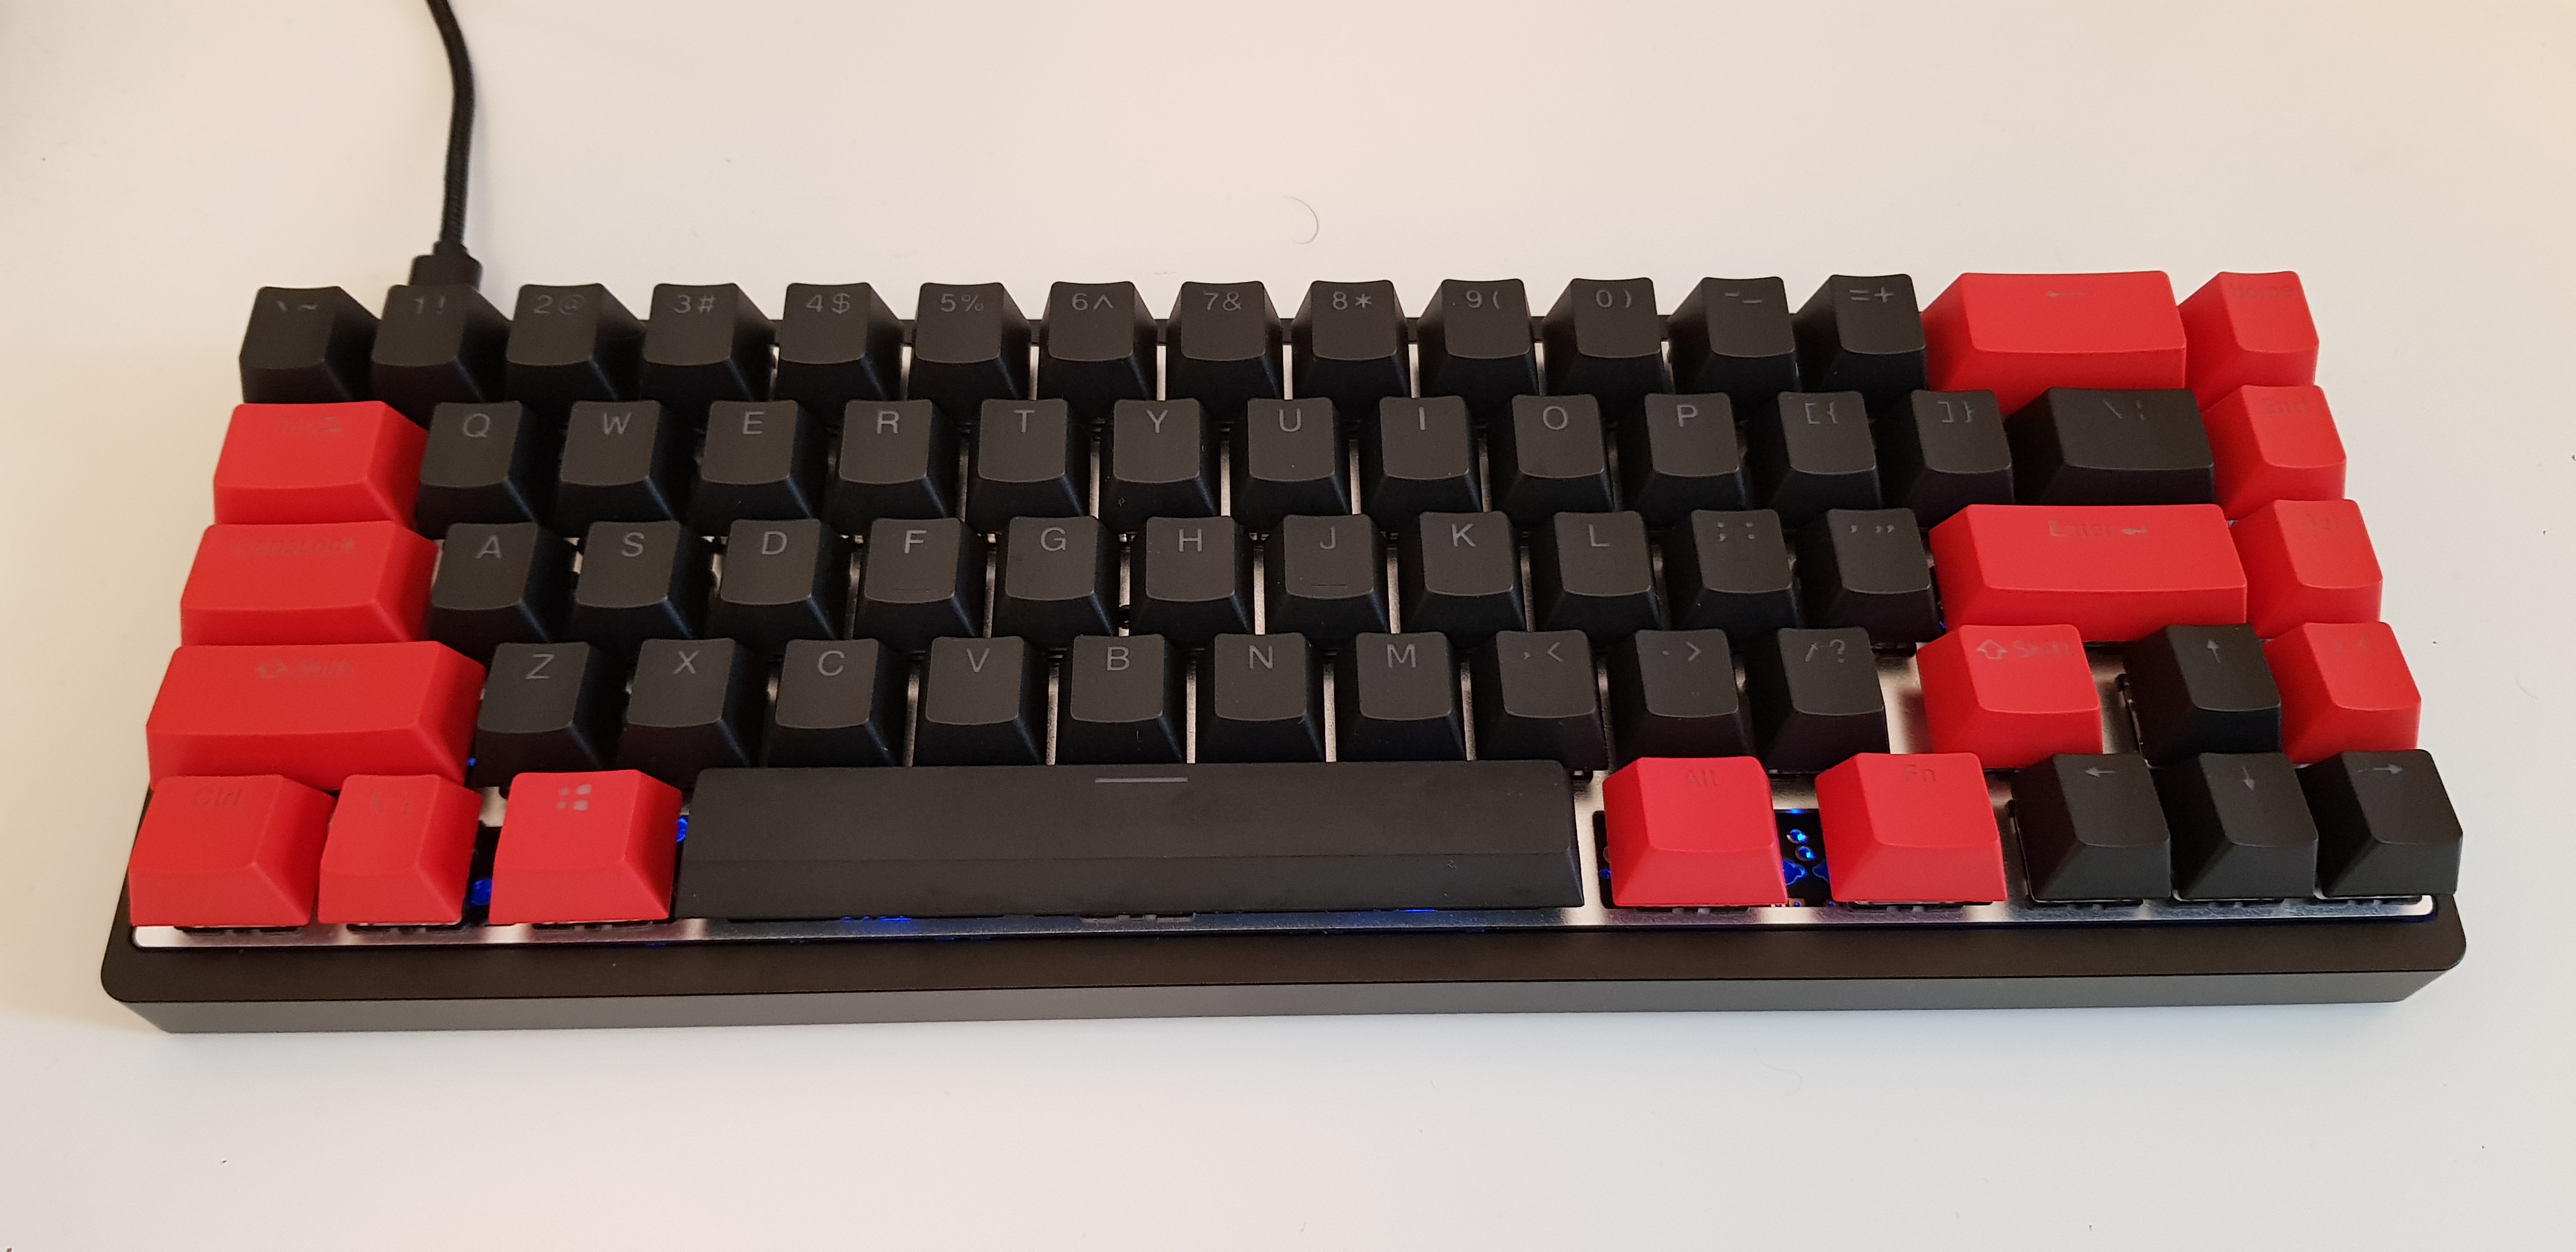 Assembled keyboard